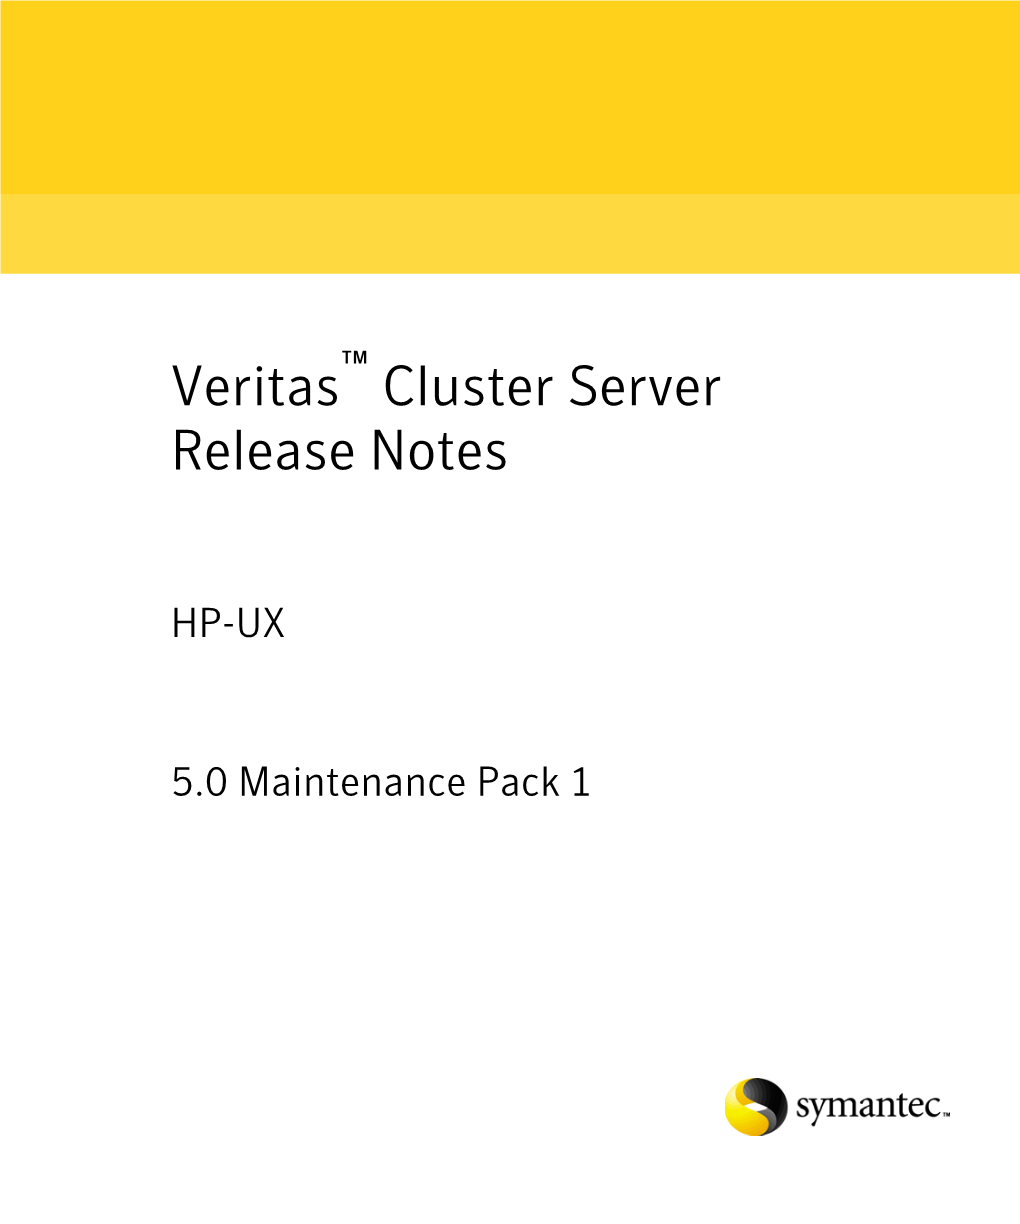 Veritas Cluster Server Release Notes